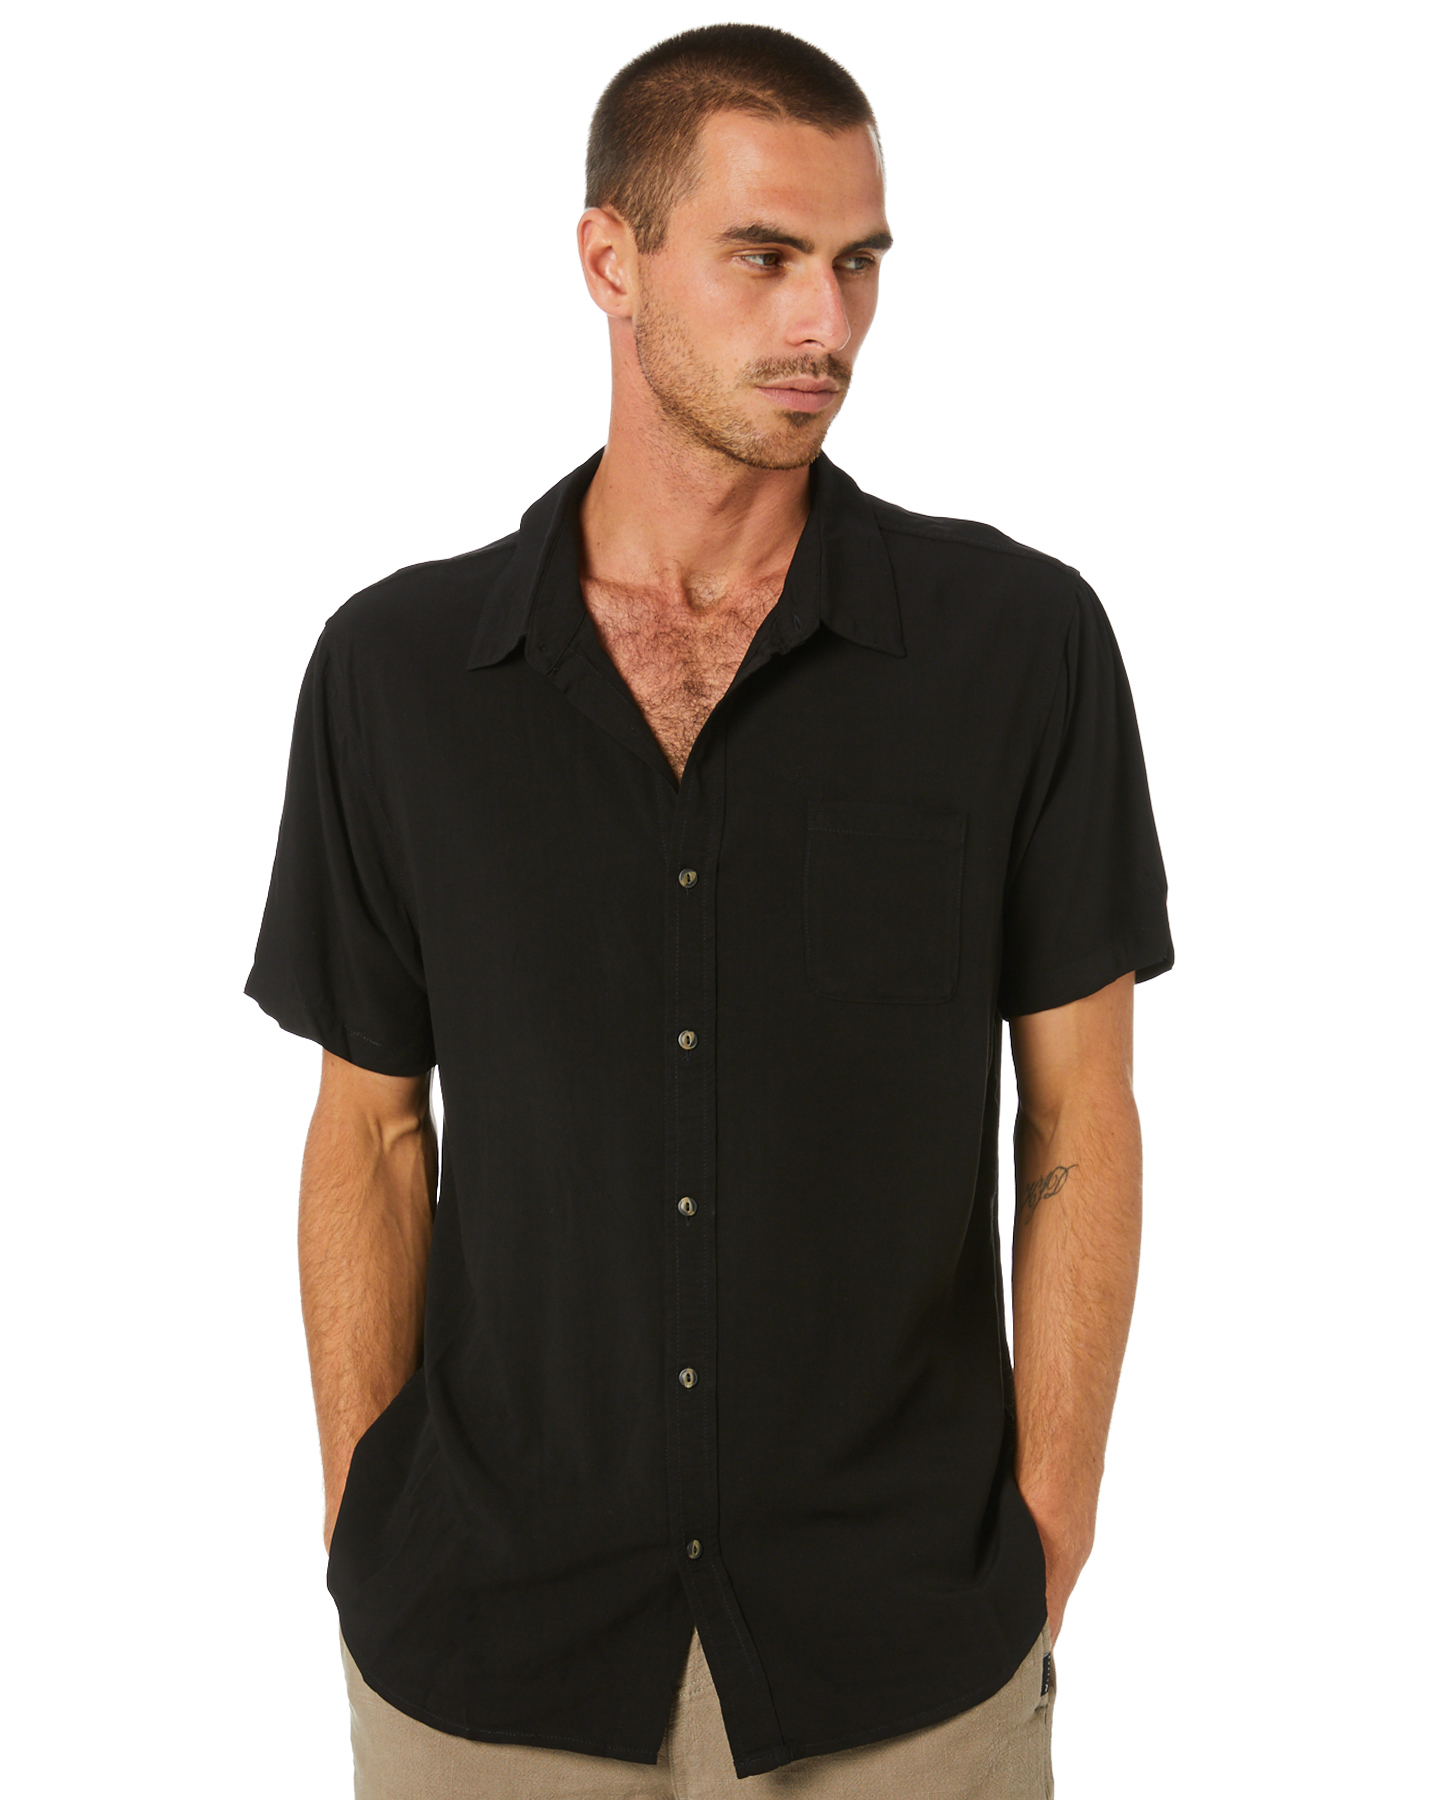 Rusty Razor Blade Mens Short Sleeve Rayon Shirt - Black | SurfStitch